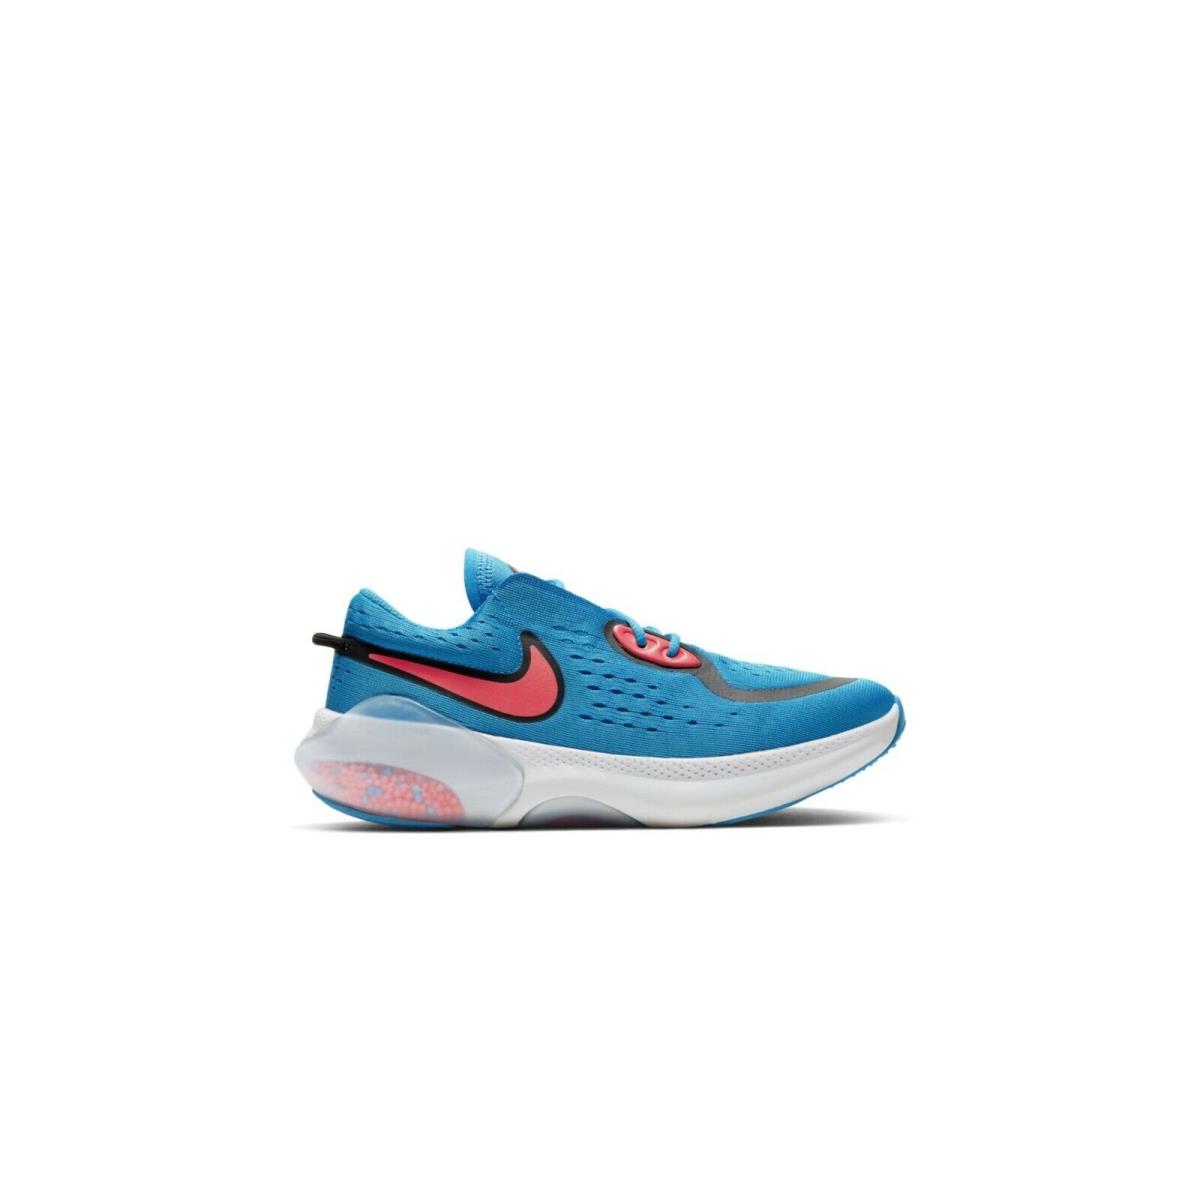 Nike Joyride Dual Run GS Kids Running Shoes CN9600 450 Size 6 Y US